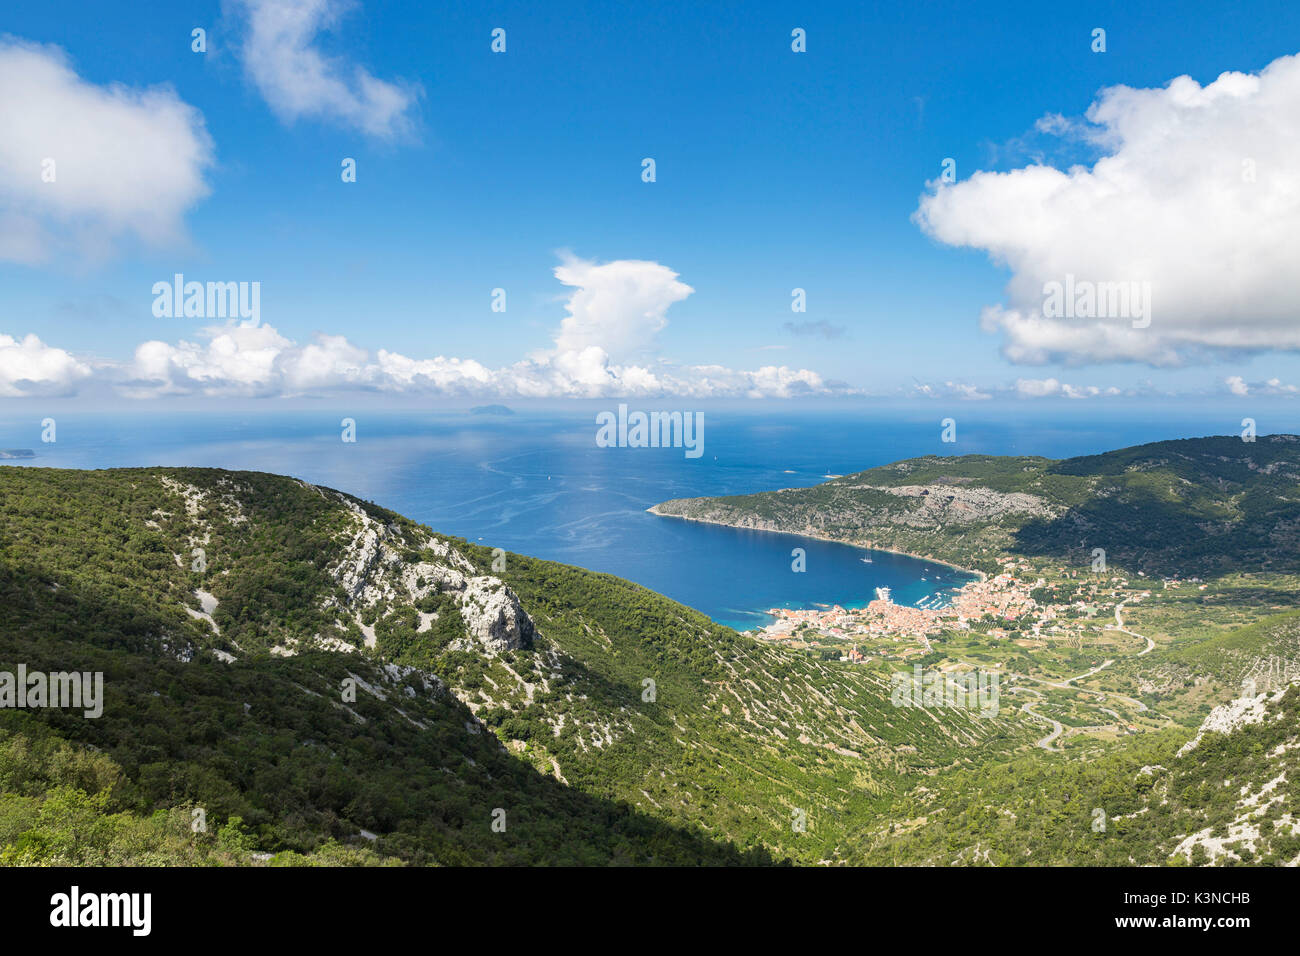 View of the village of Komiza from Hum mount (Komiza, Vis Island, Split-Dalmatia county, Dalmatia region, Croatia, Europe) Stock Photo